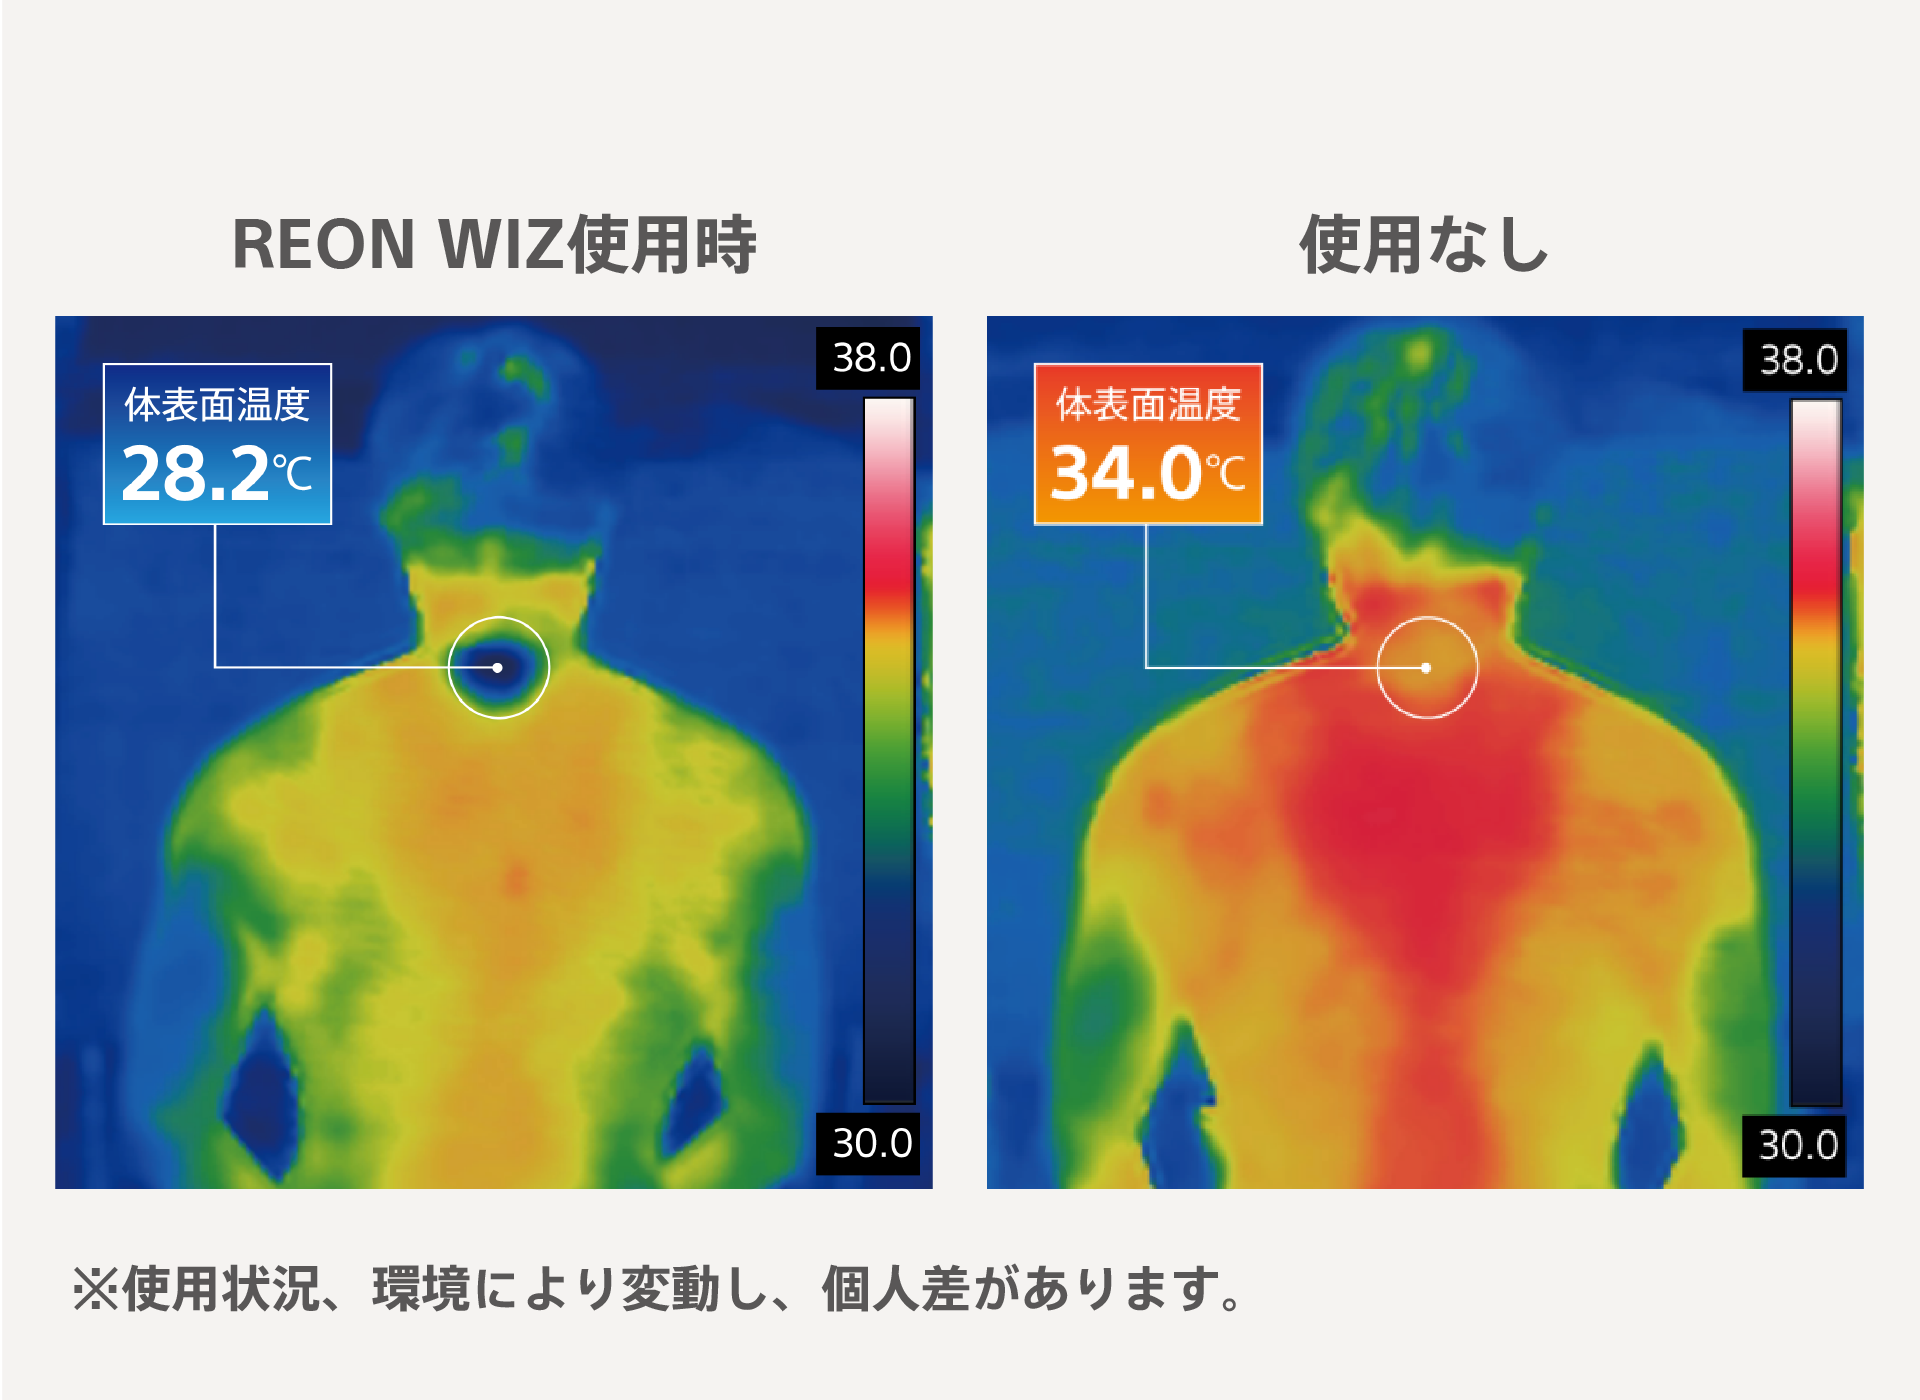 REON WIZ使用時と、使用なしの場合の、室温30℃の環境にて、安静状態で5分経過後の体表面温度の画像